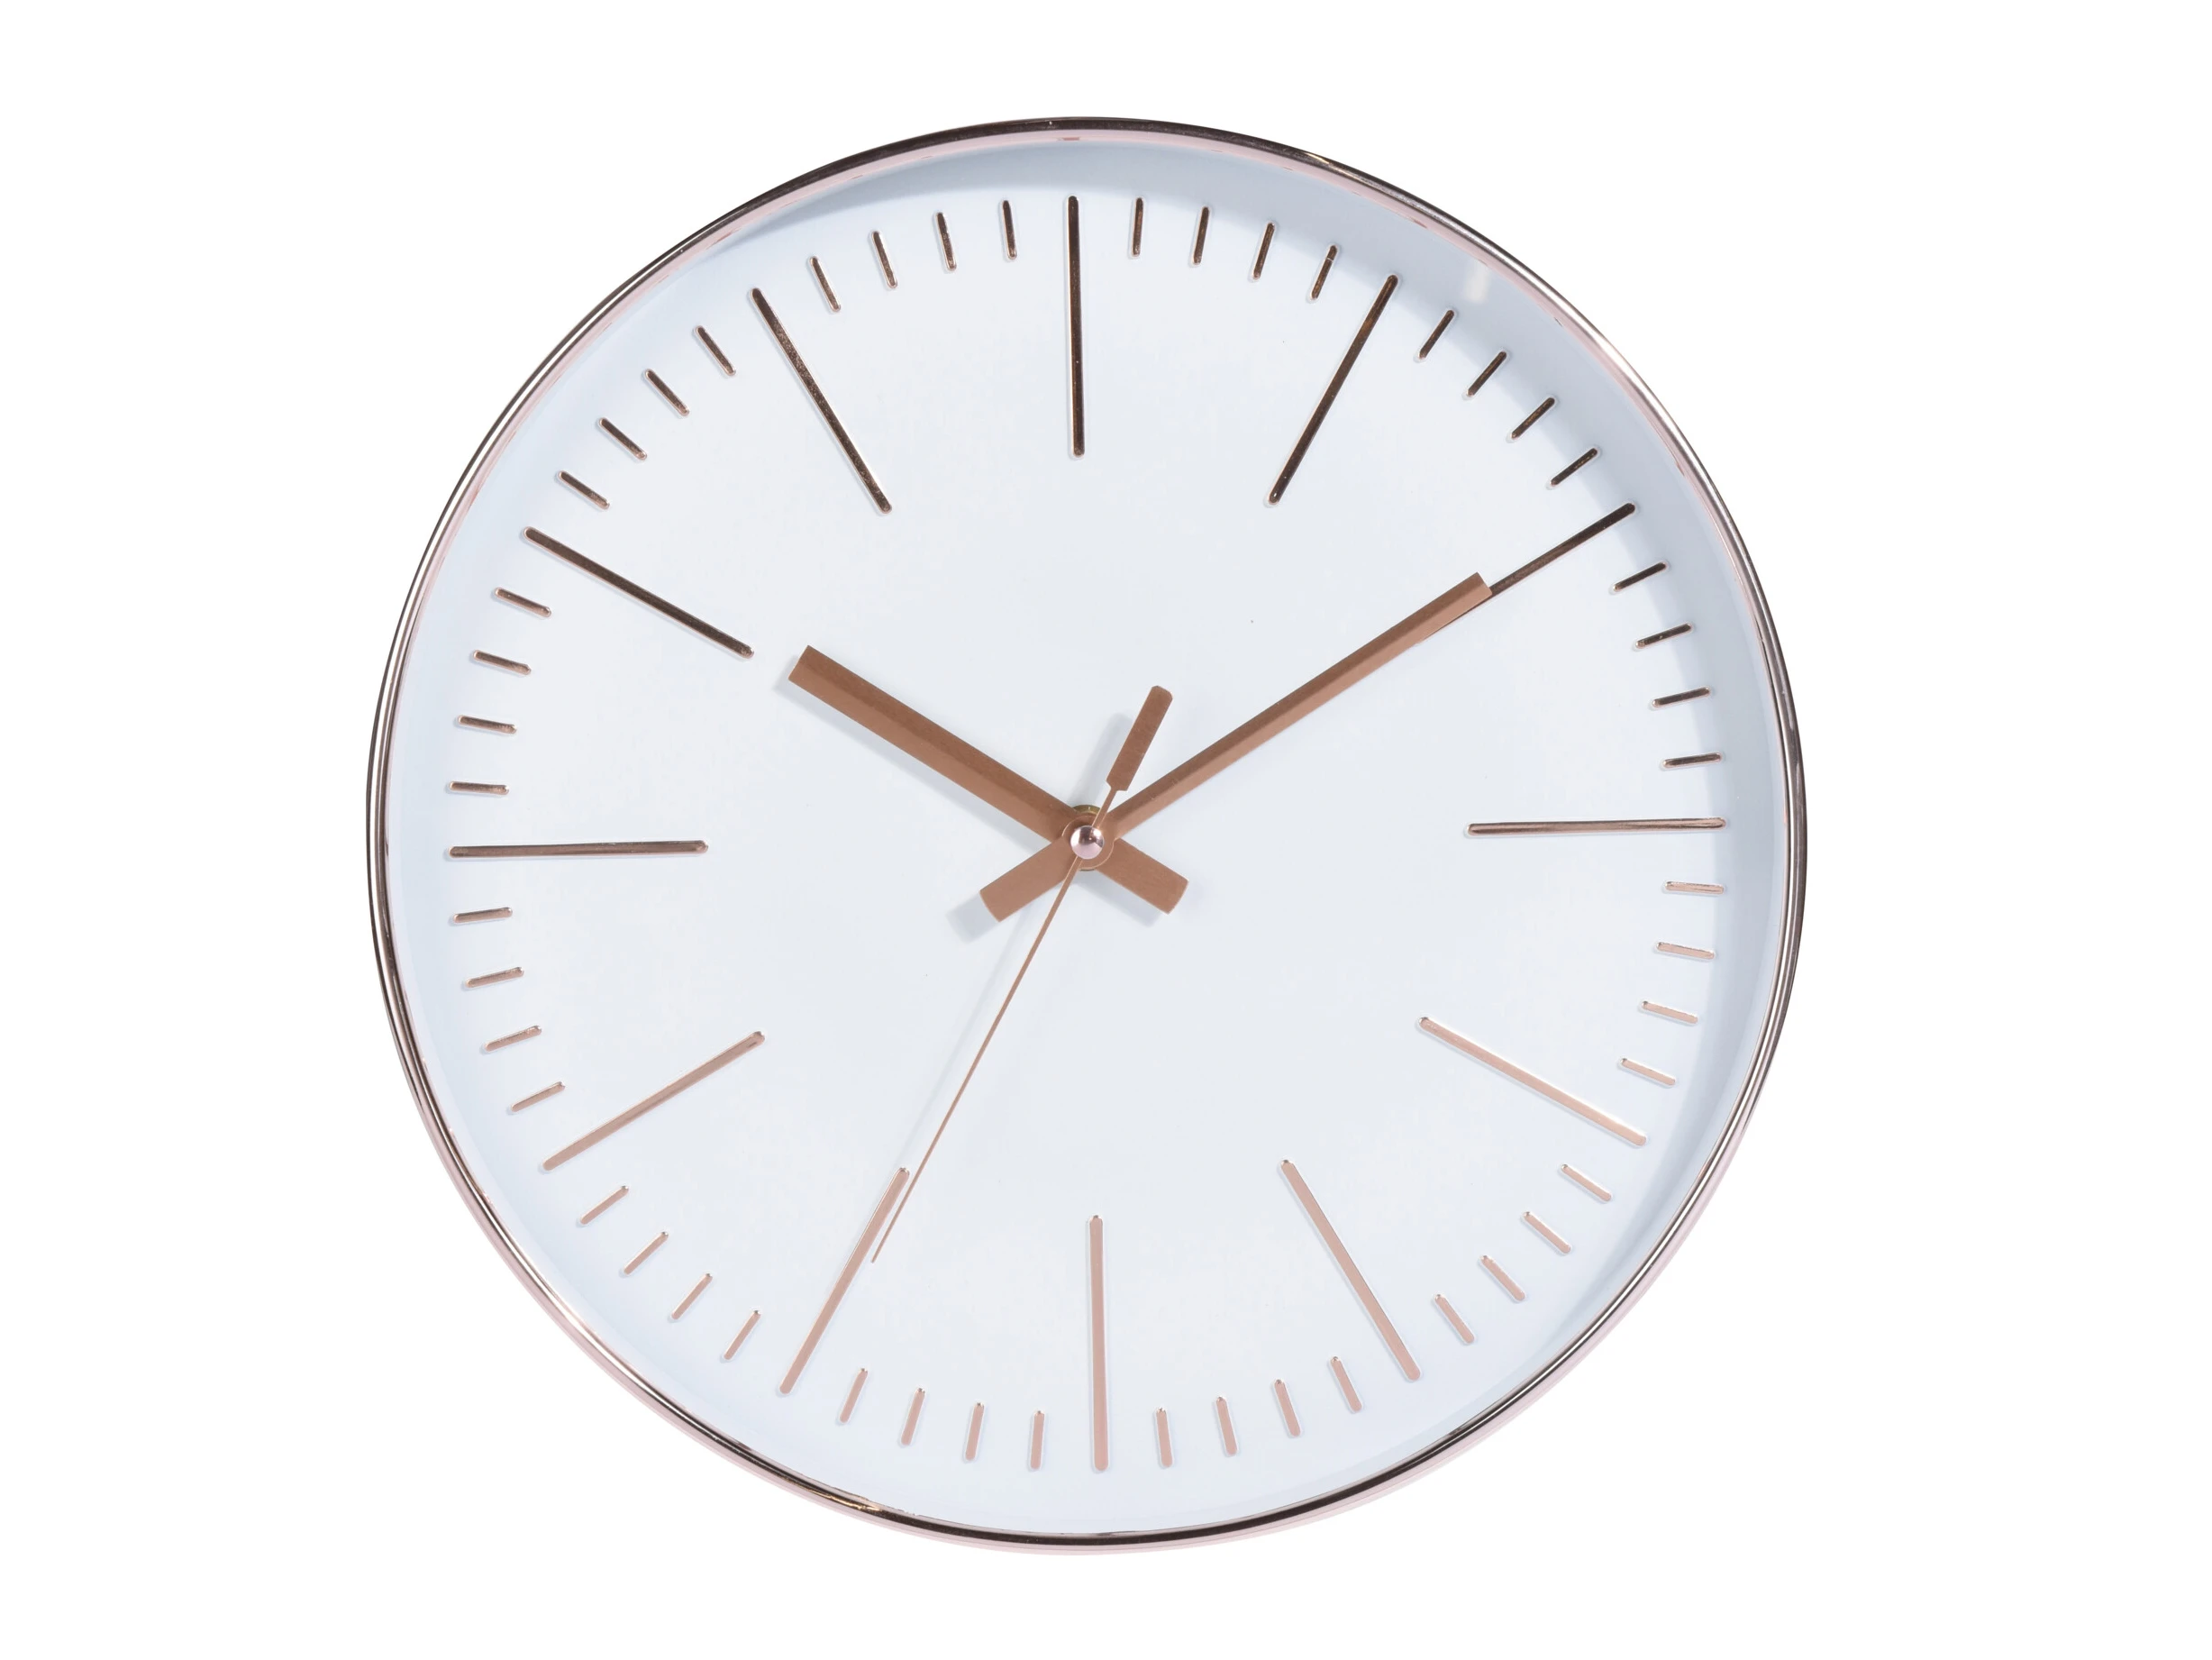 Настенные часы для прихожей - купить настенные часы для прихожей в Москве, цена в каталоге интернет-магазина